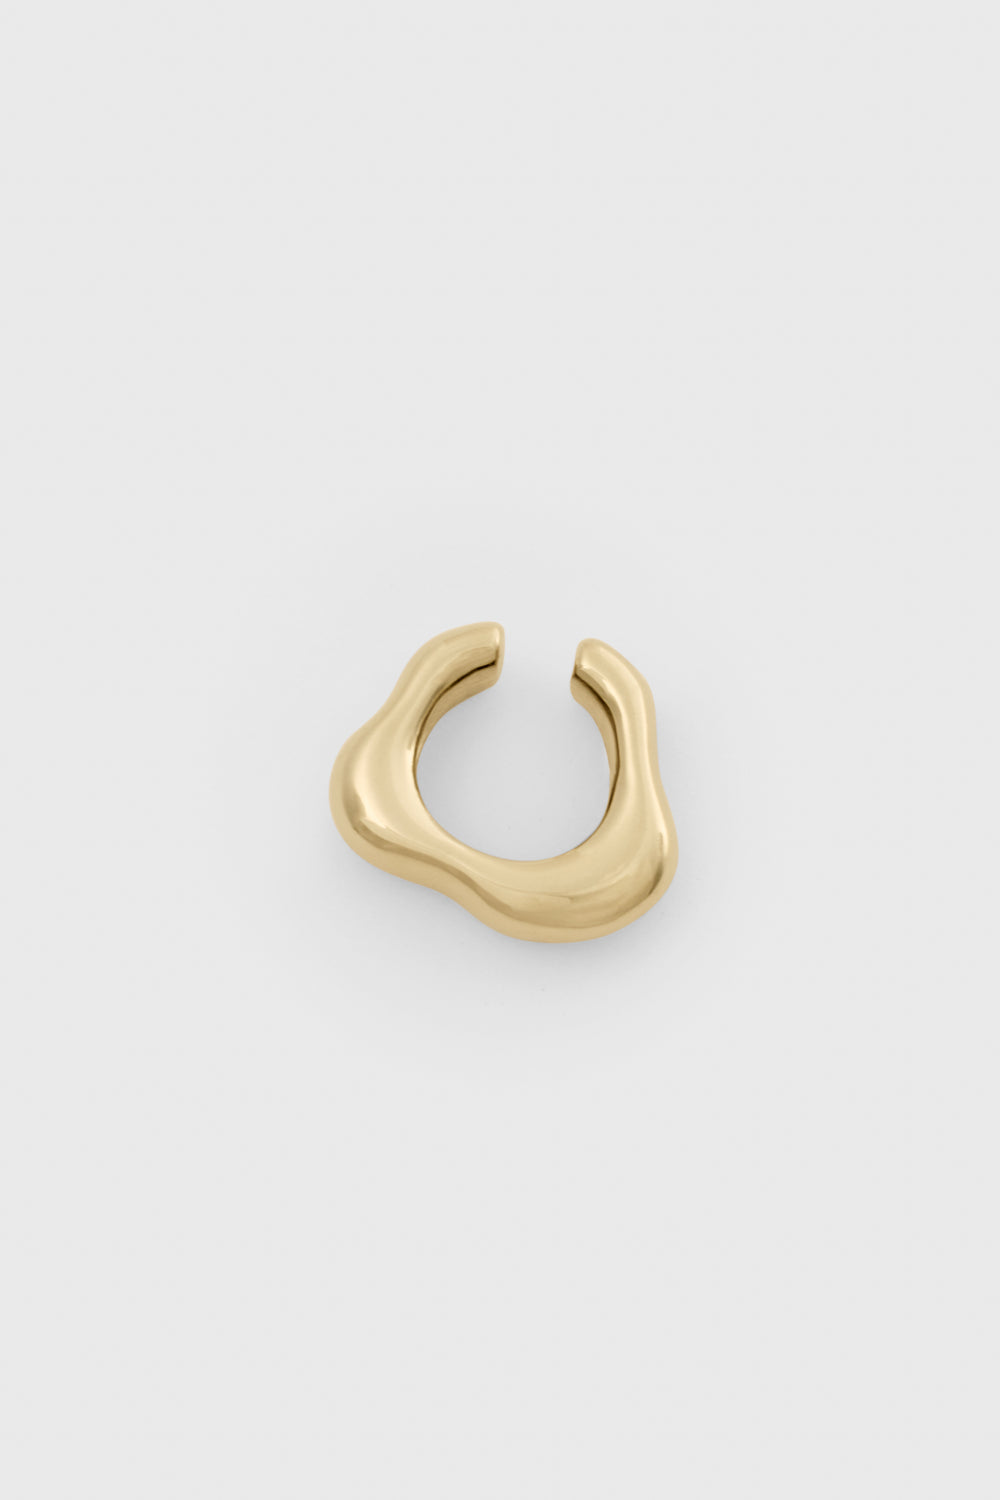 Fluid Form Ear Cuff - 925 Sterling Silver | Ino One Size / 14K Gold